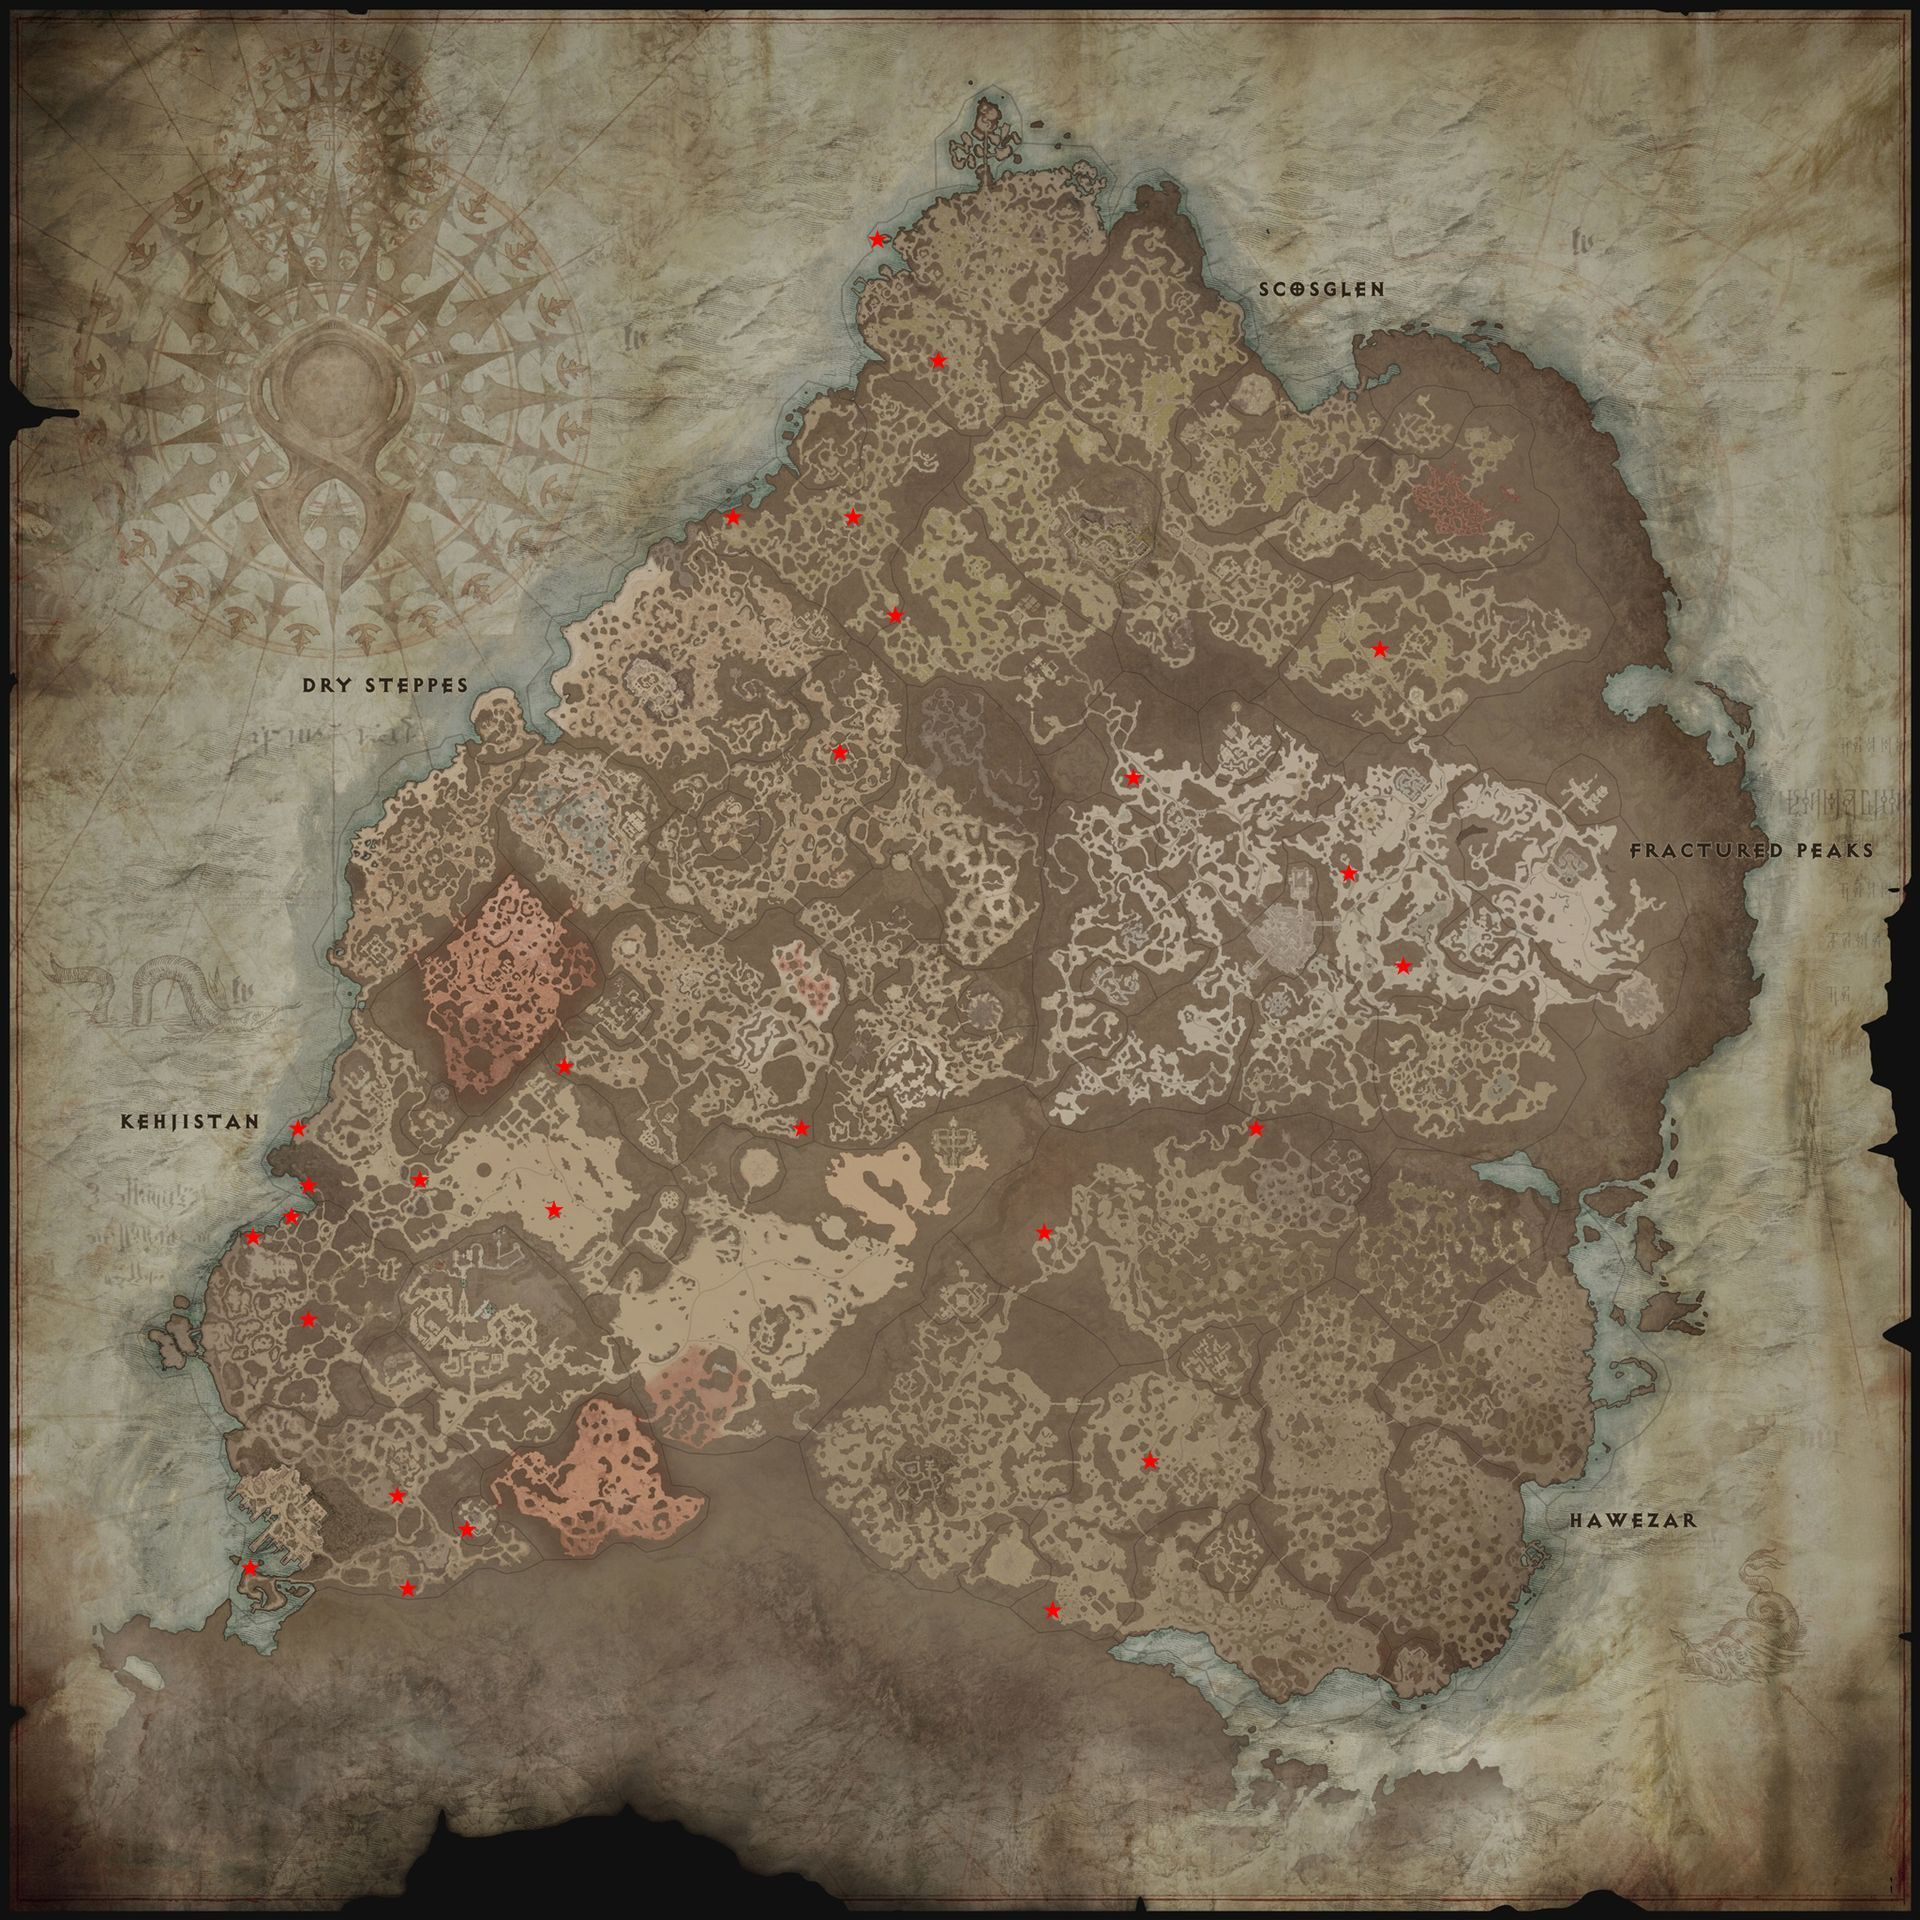 Diablo 4 Helltide Chest locations guide